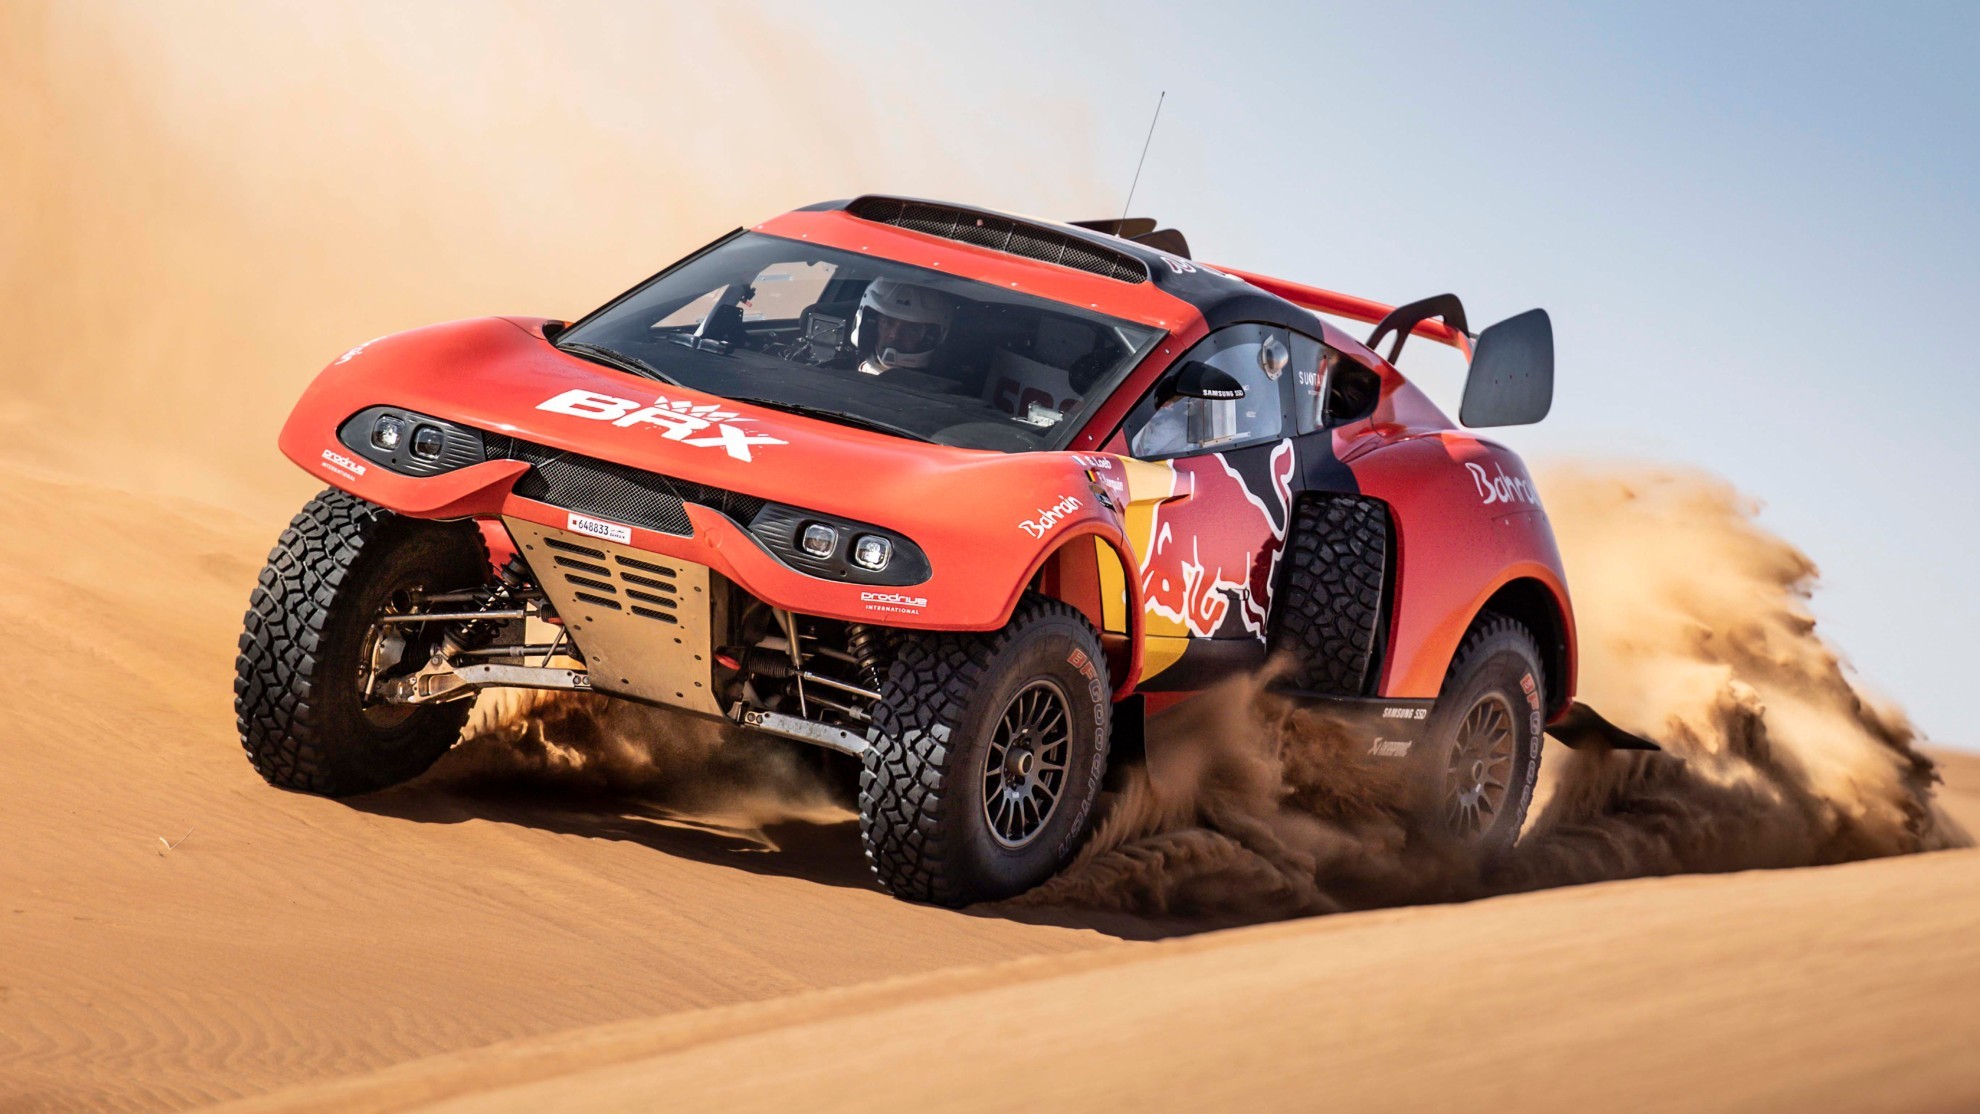 Previa coches - Dakar 2022 - Carlos Sainz - Al-Attiyah - Loeb - Audi - T1+